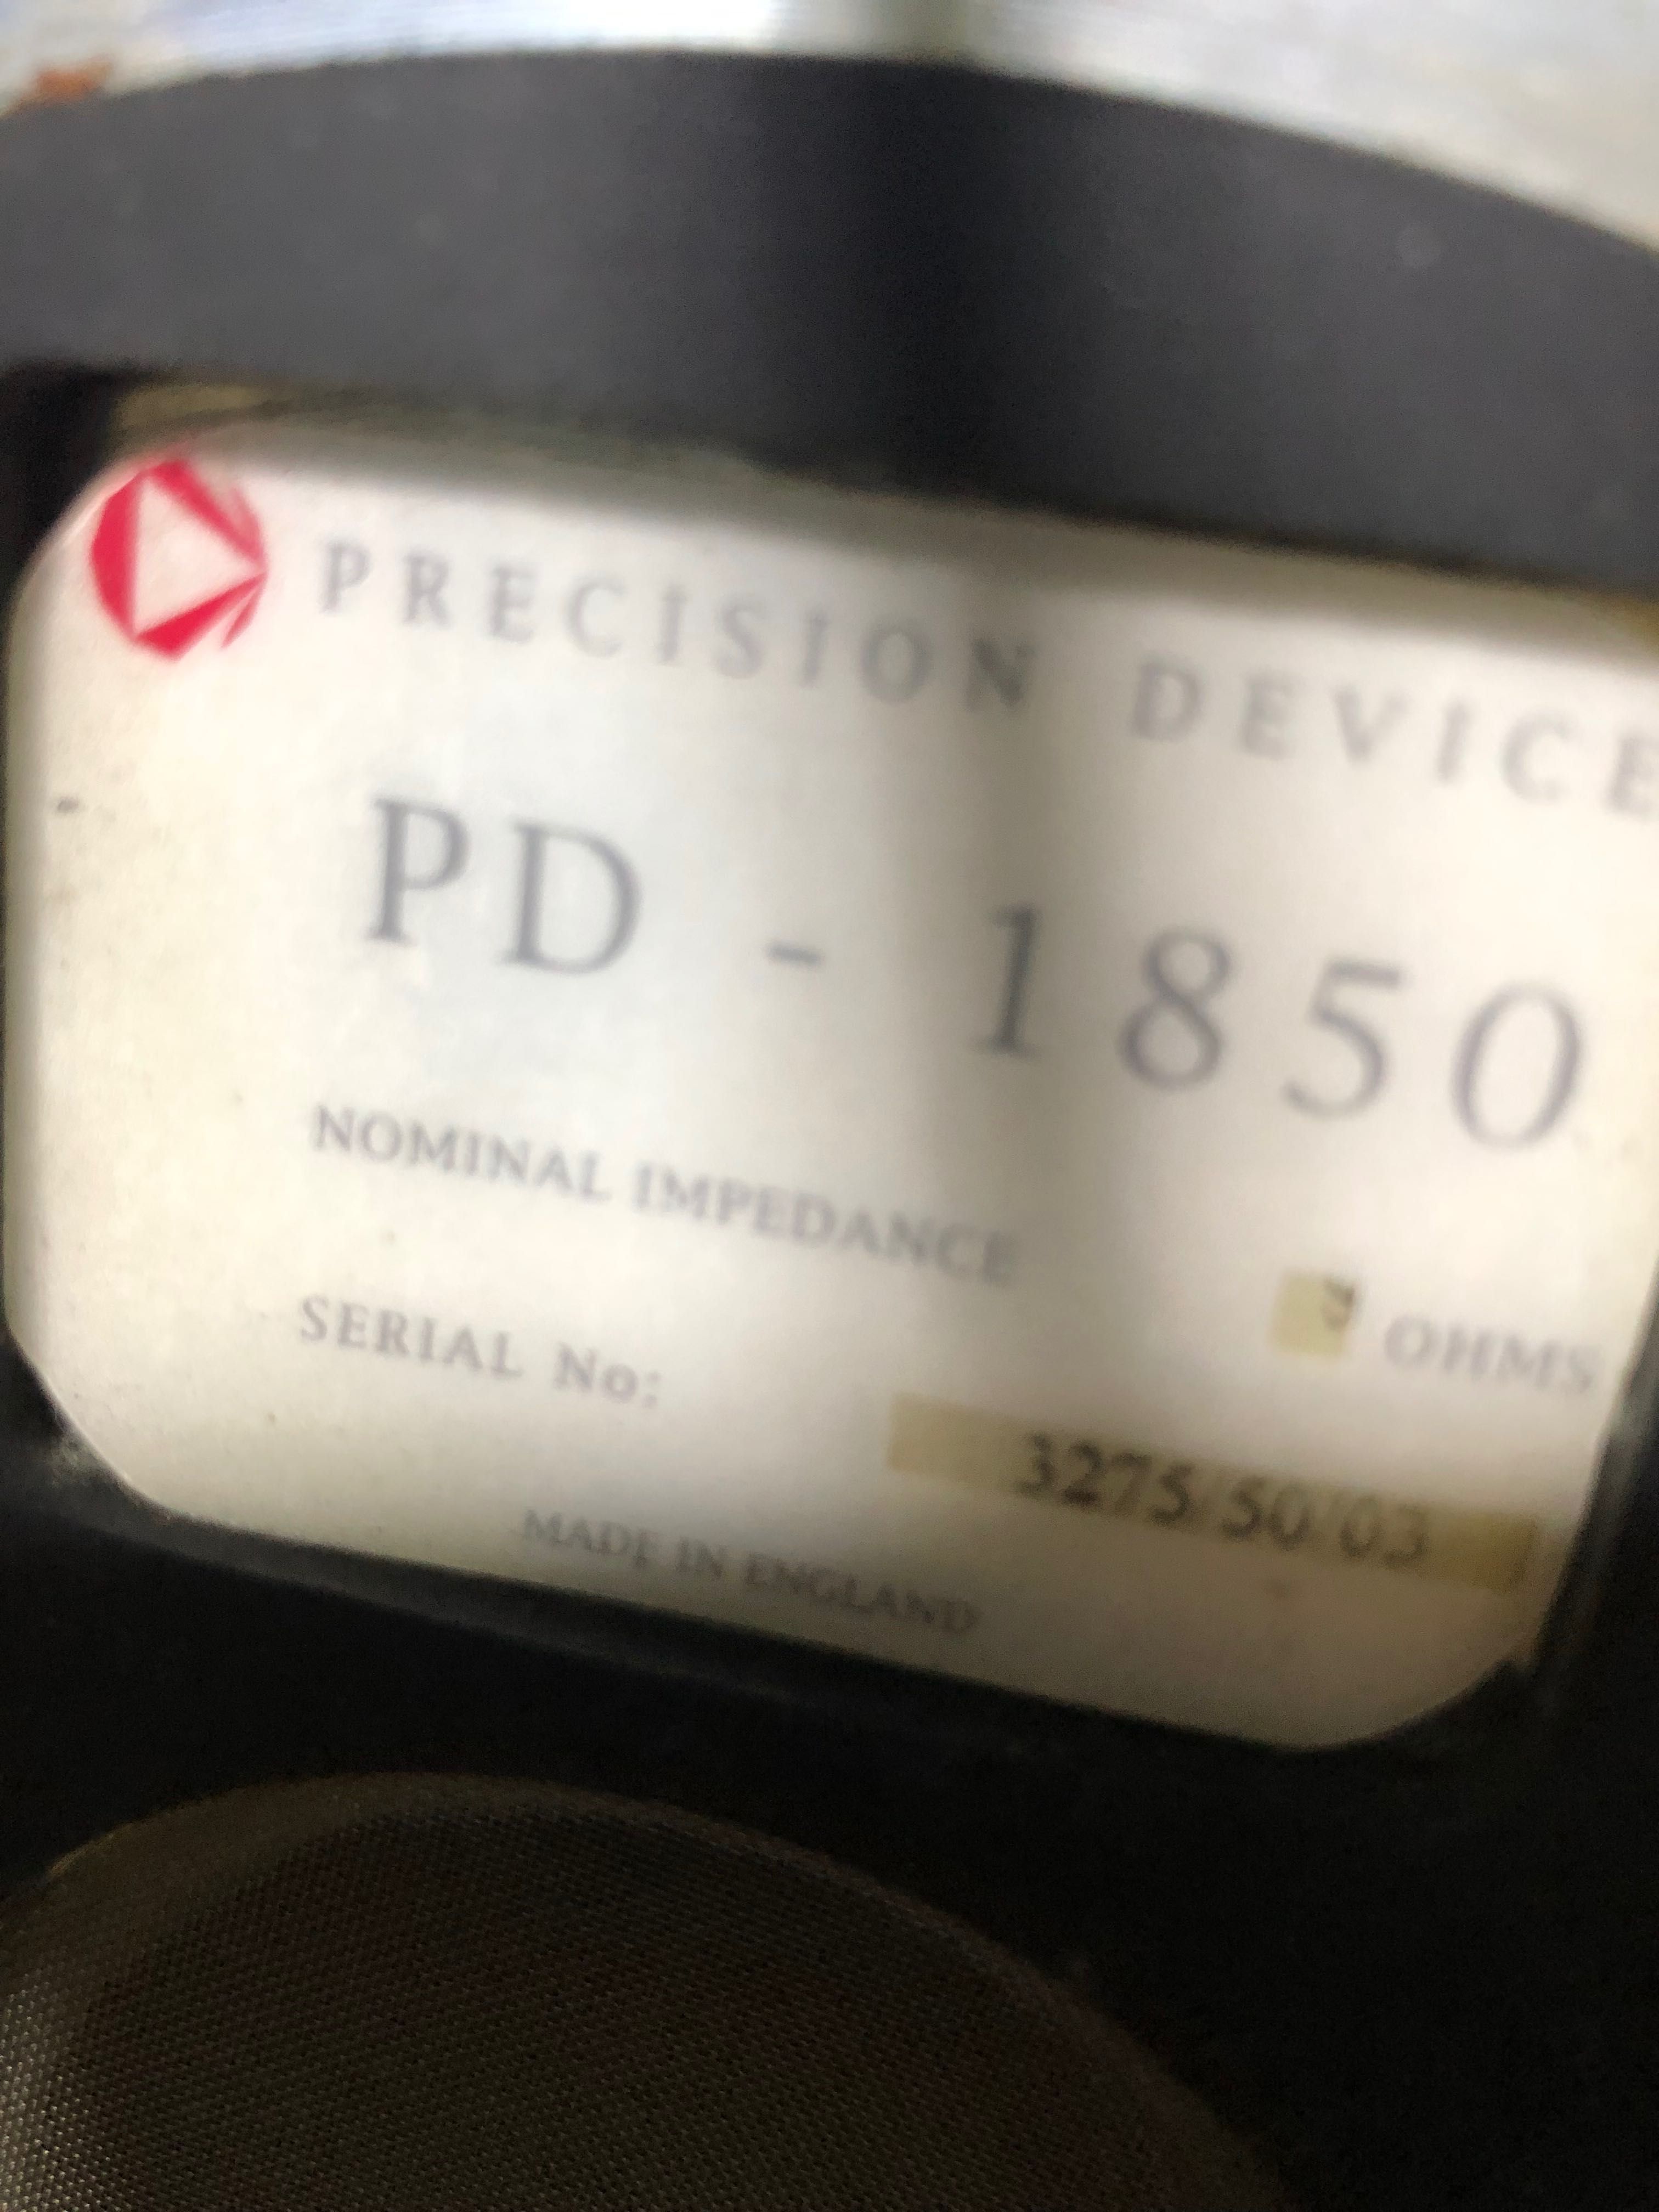 Високоговорител proffesional Precisions devices - РD-1850 -700лв